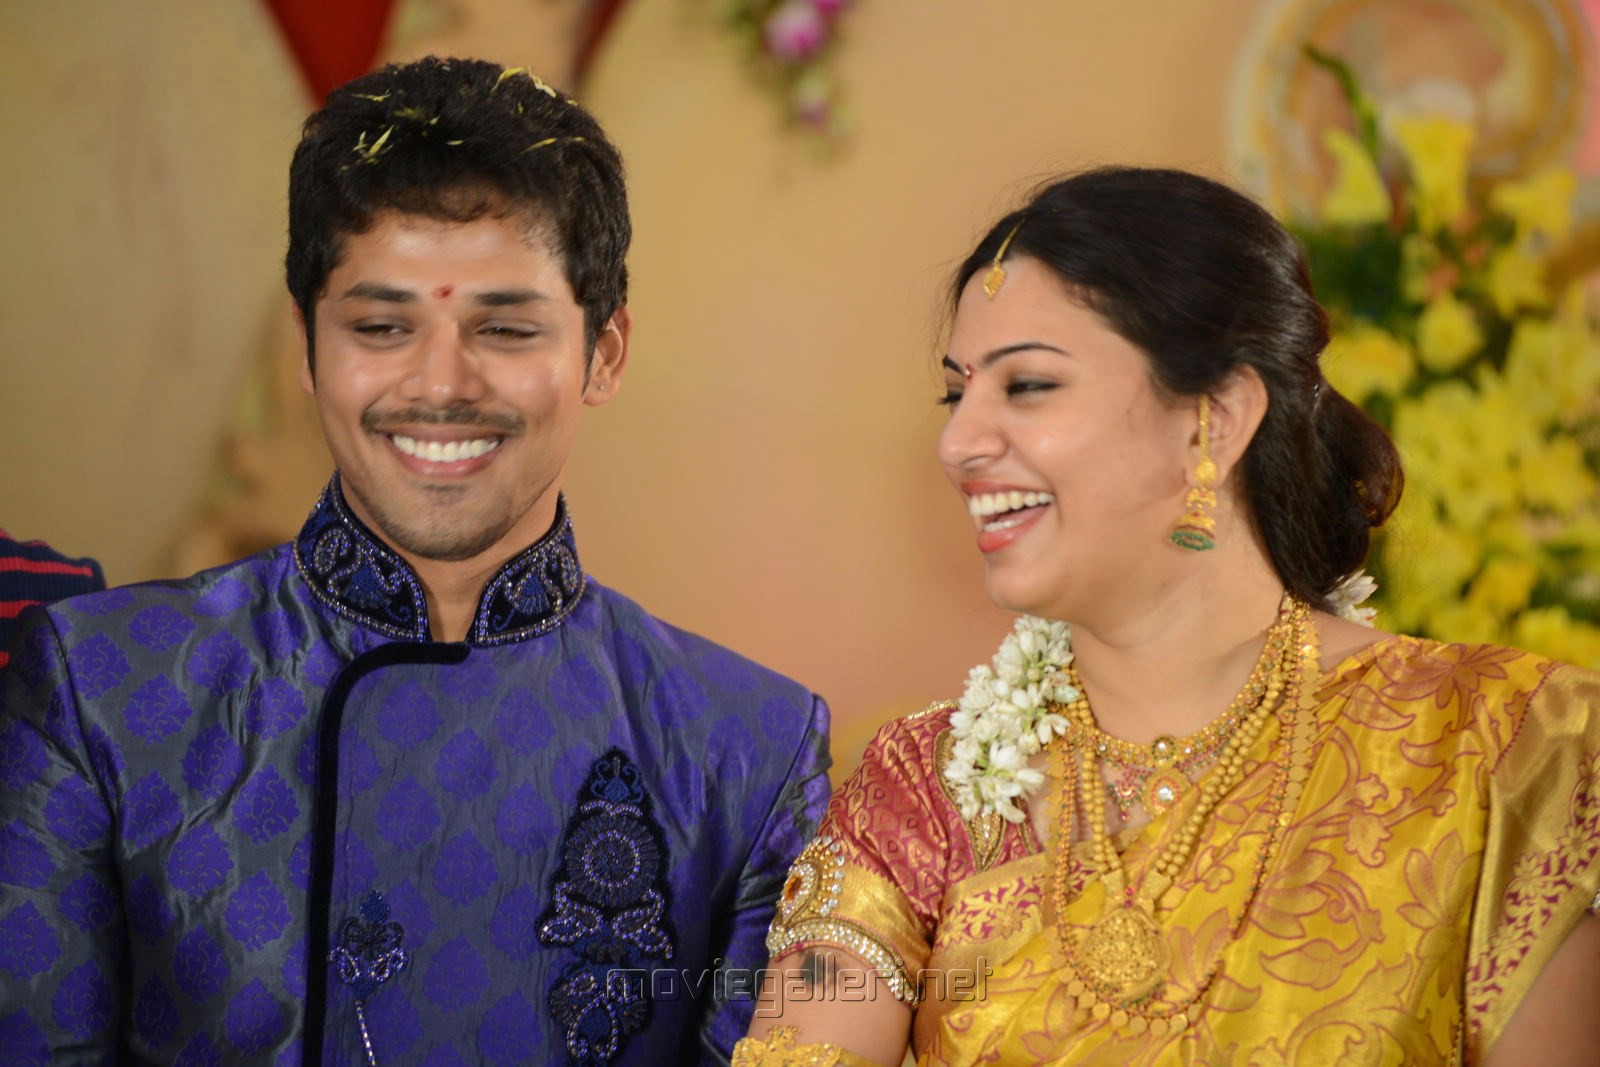 Actor Nandu & Singer Geetha Madhuri Engagement Photos.